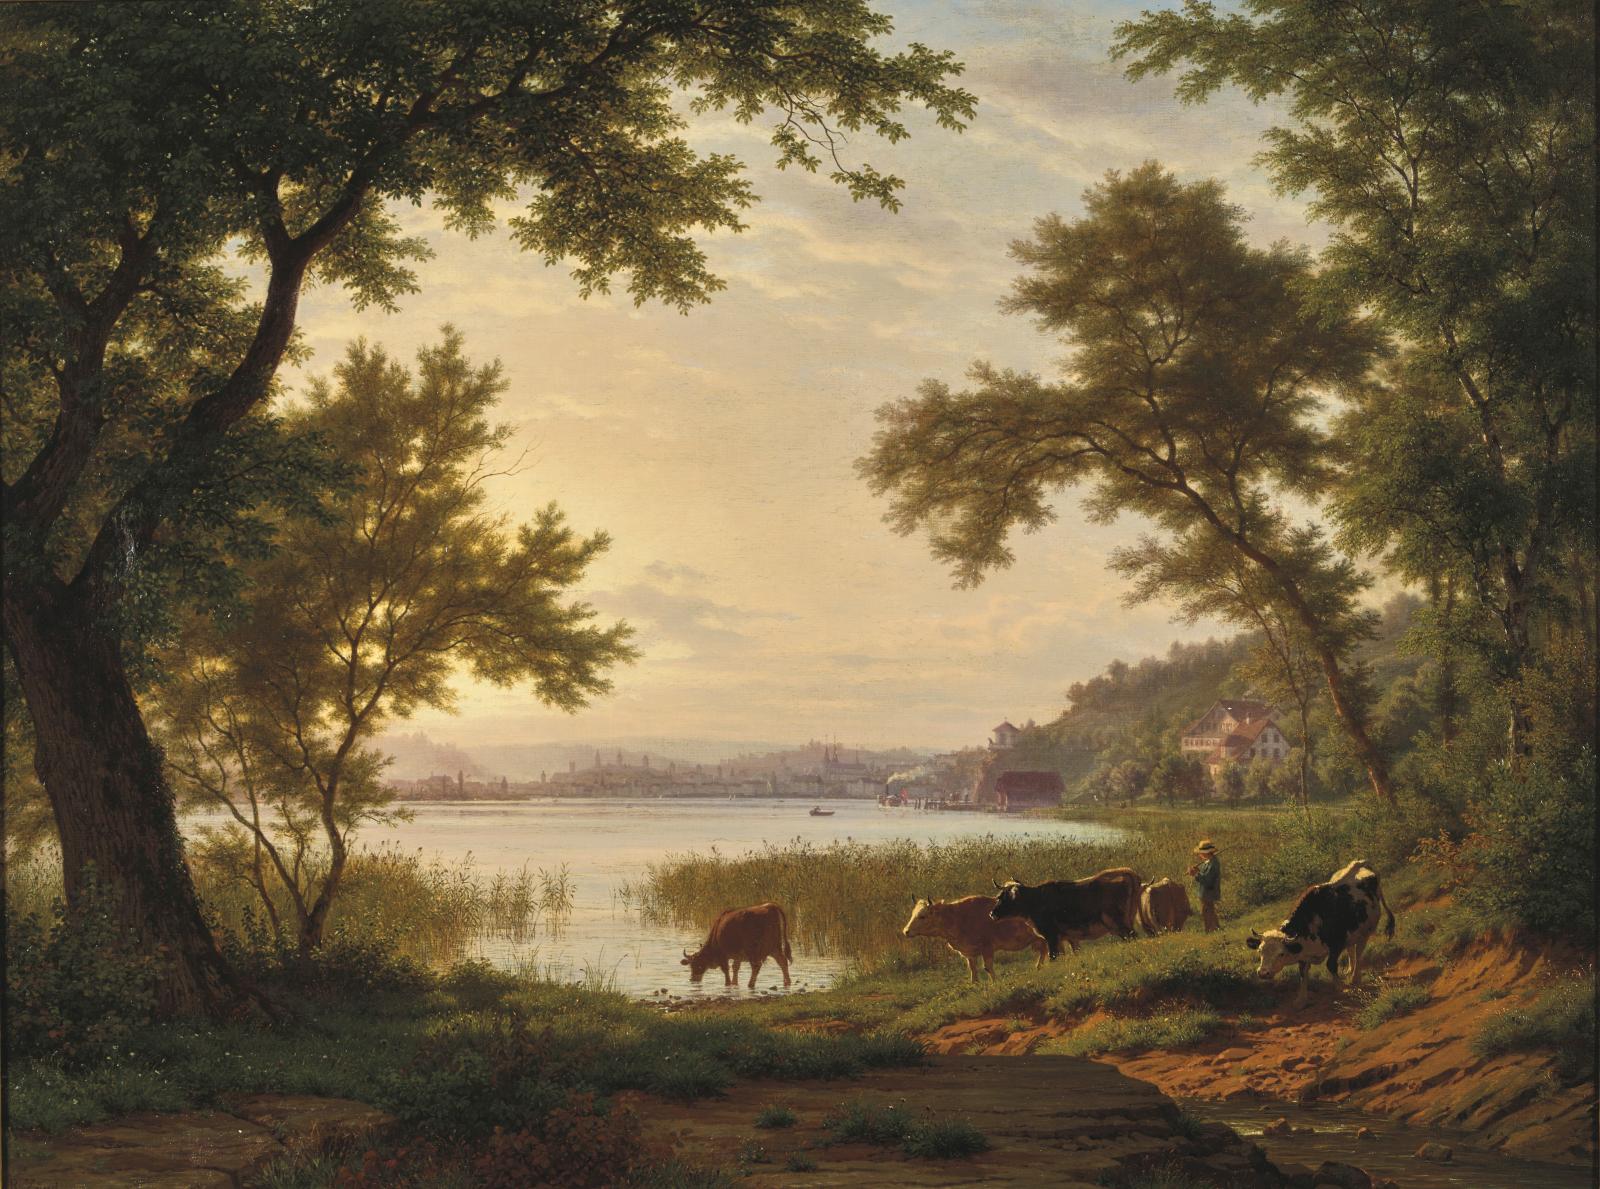 Le paysage idéal de Robert Zünd